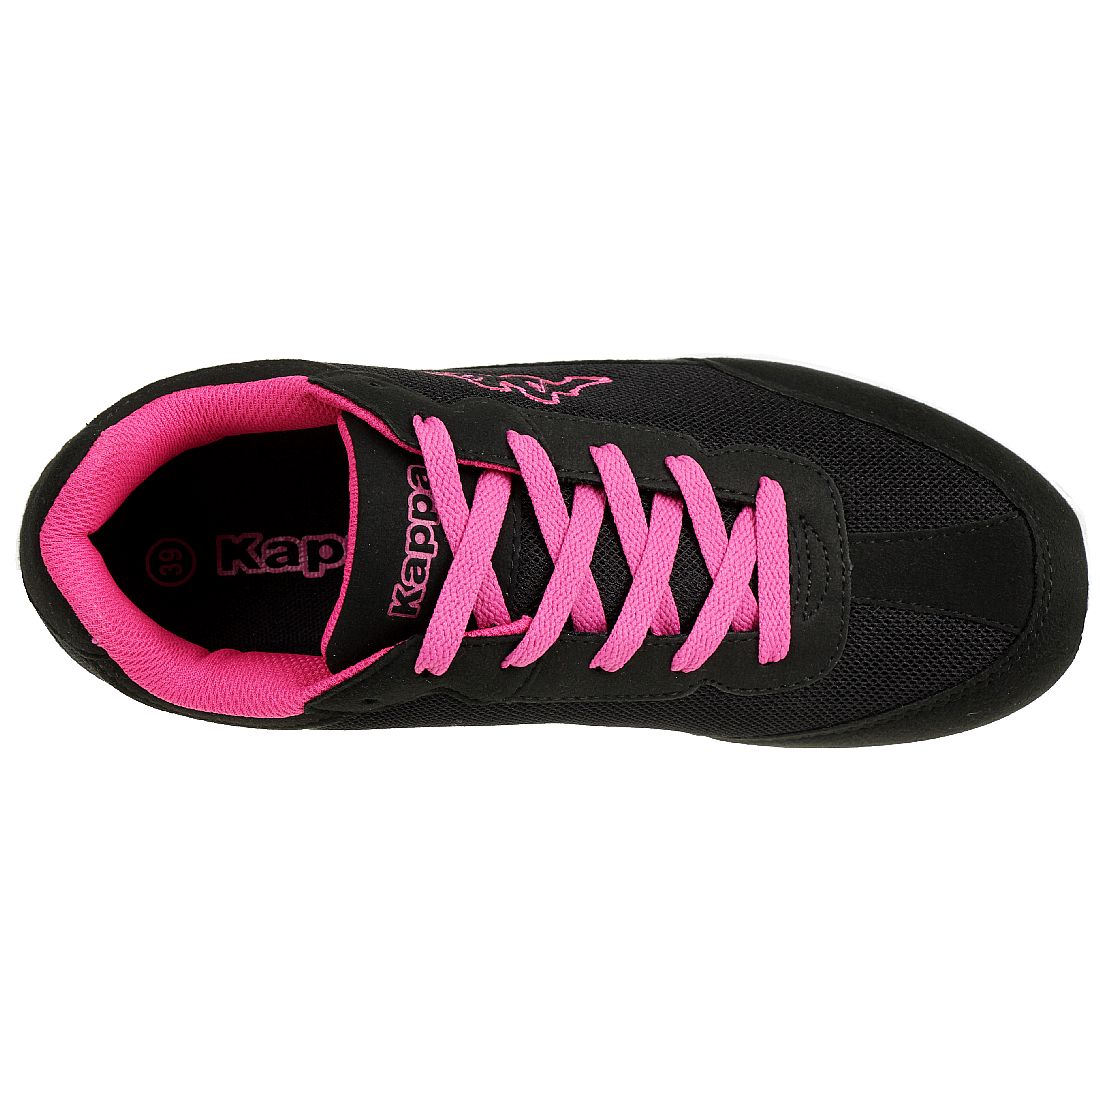 Kappa Rocket Sneaker Damen schwarz Turnschuhe Schuhe 242130/1127